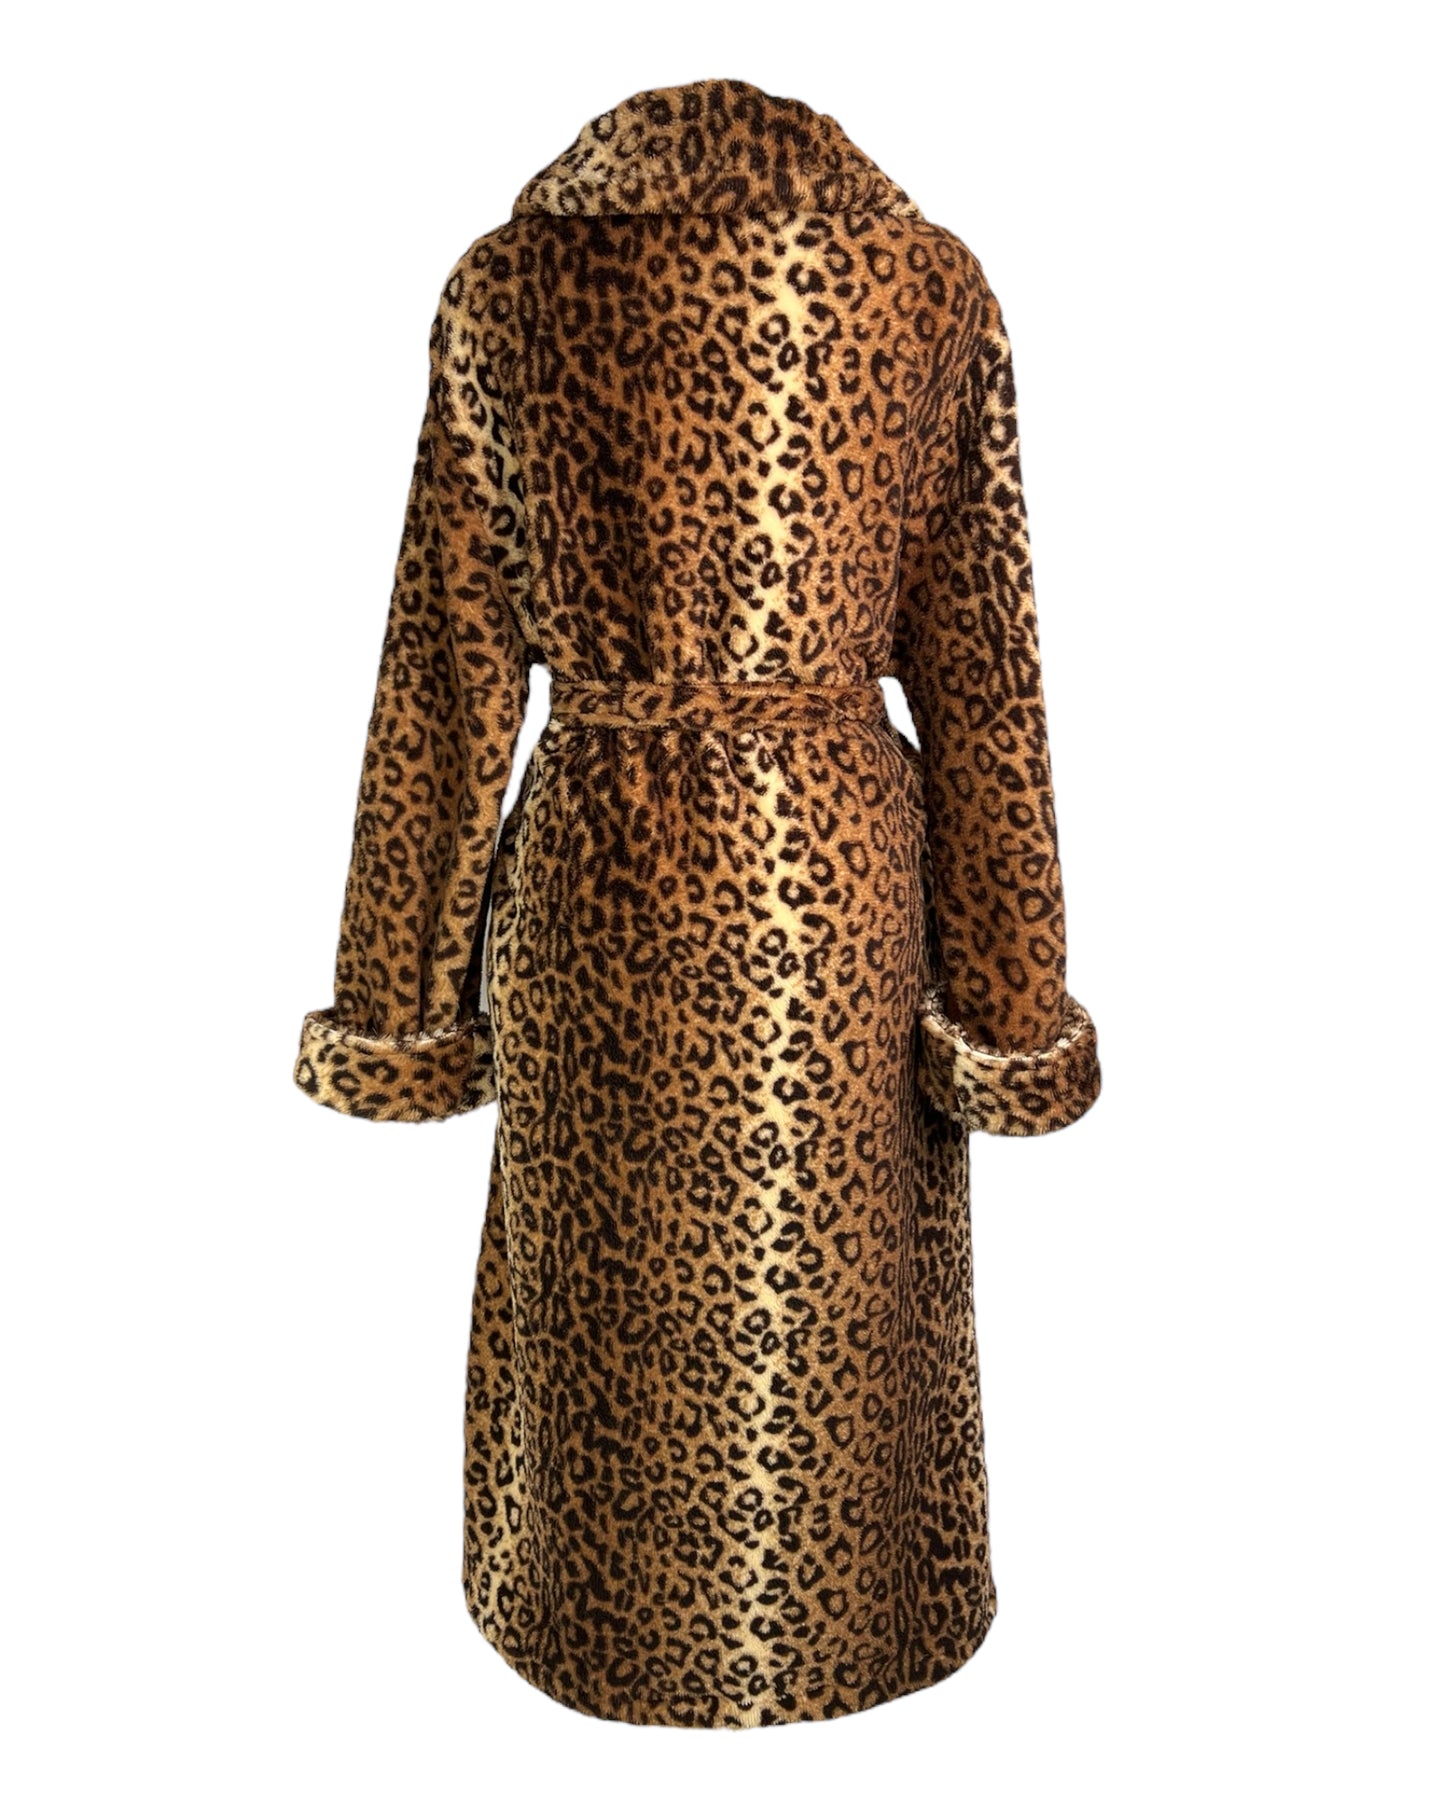 2000s Cheetalicious Robe